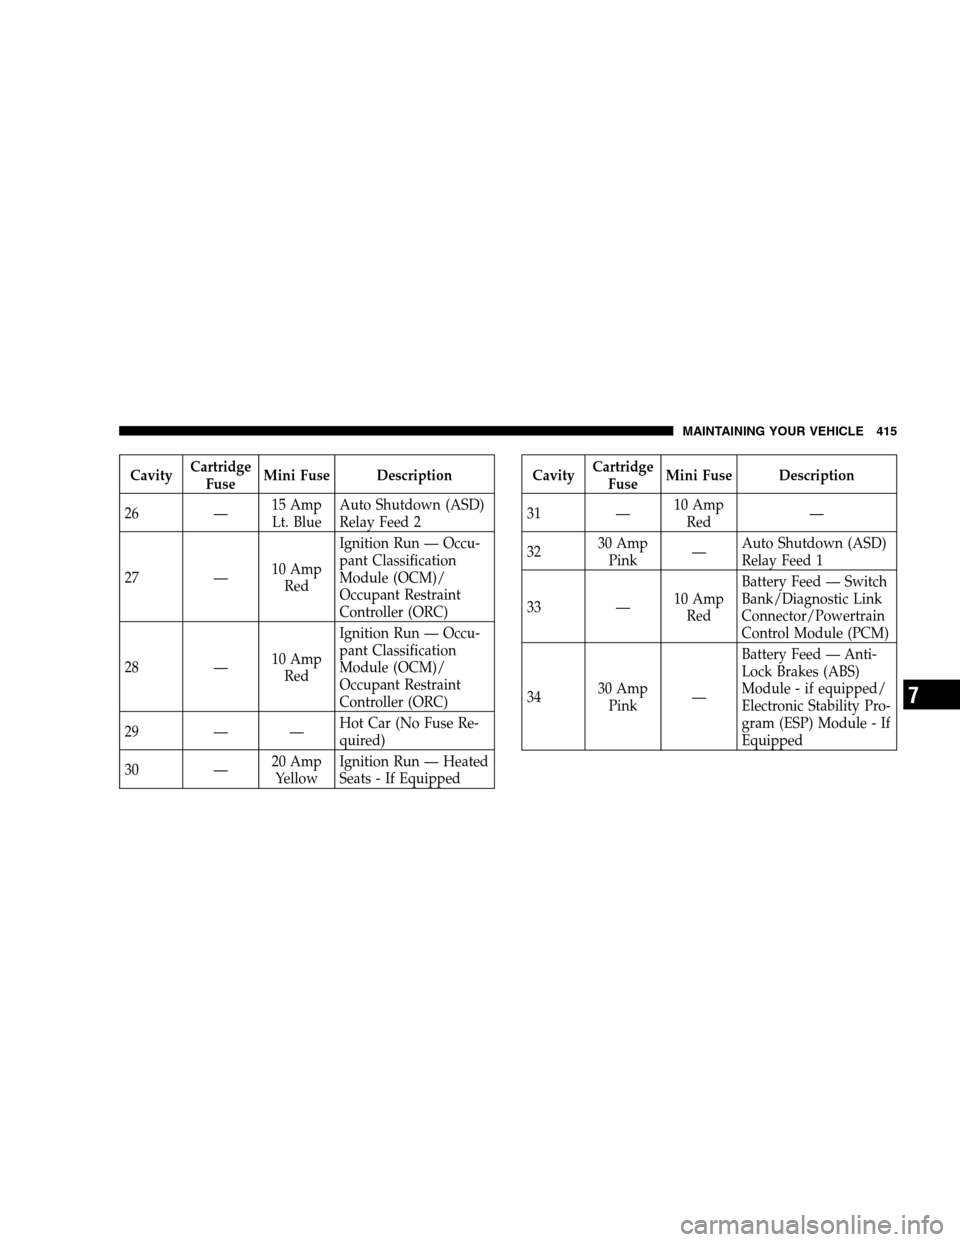 CHRYSLER SEBRING SEDAN 2008 3.G Owners Manual CavityCartridge
FuseMini Fuse Description
26 —15 Amp
Lt. BlueAuto Shutdown (ASD)
Relay Feed 2
27 —10 Amp
RedIgnition Run — Occu-
pant Classification
Module (OCM)/
Occupant Restraint
Controller (